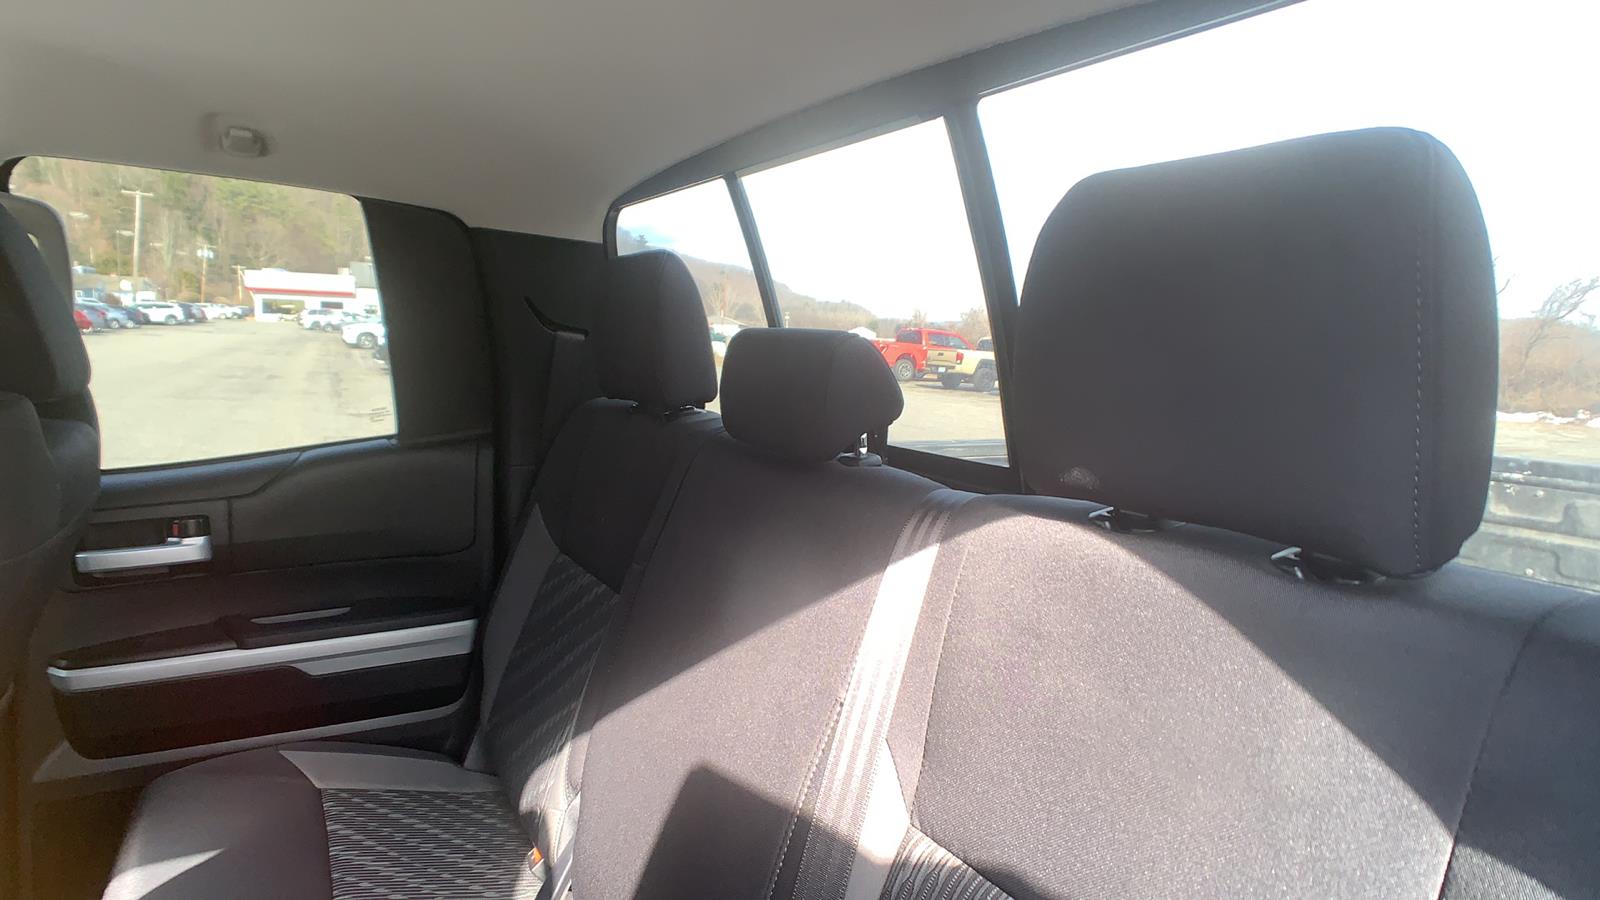 2020 Toyota Tundra Standard Bed,Crew Cab Pickup